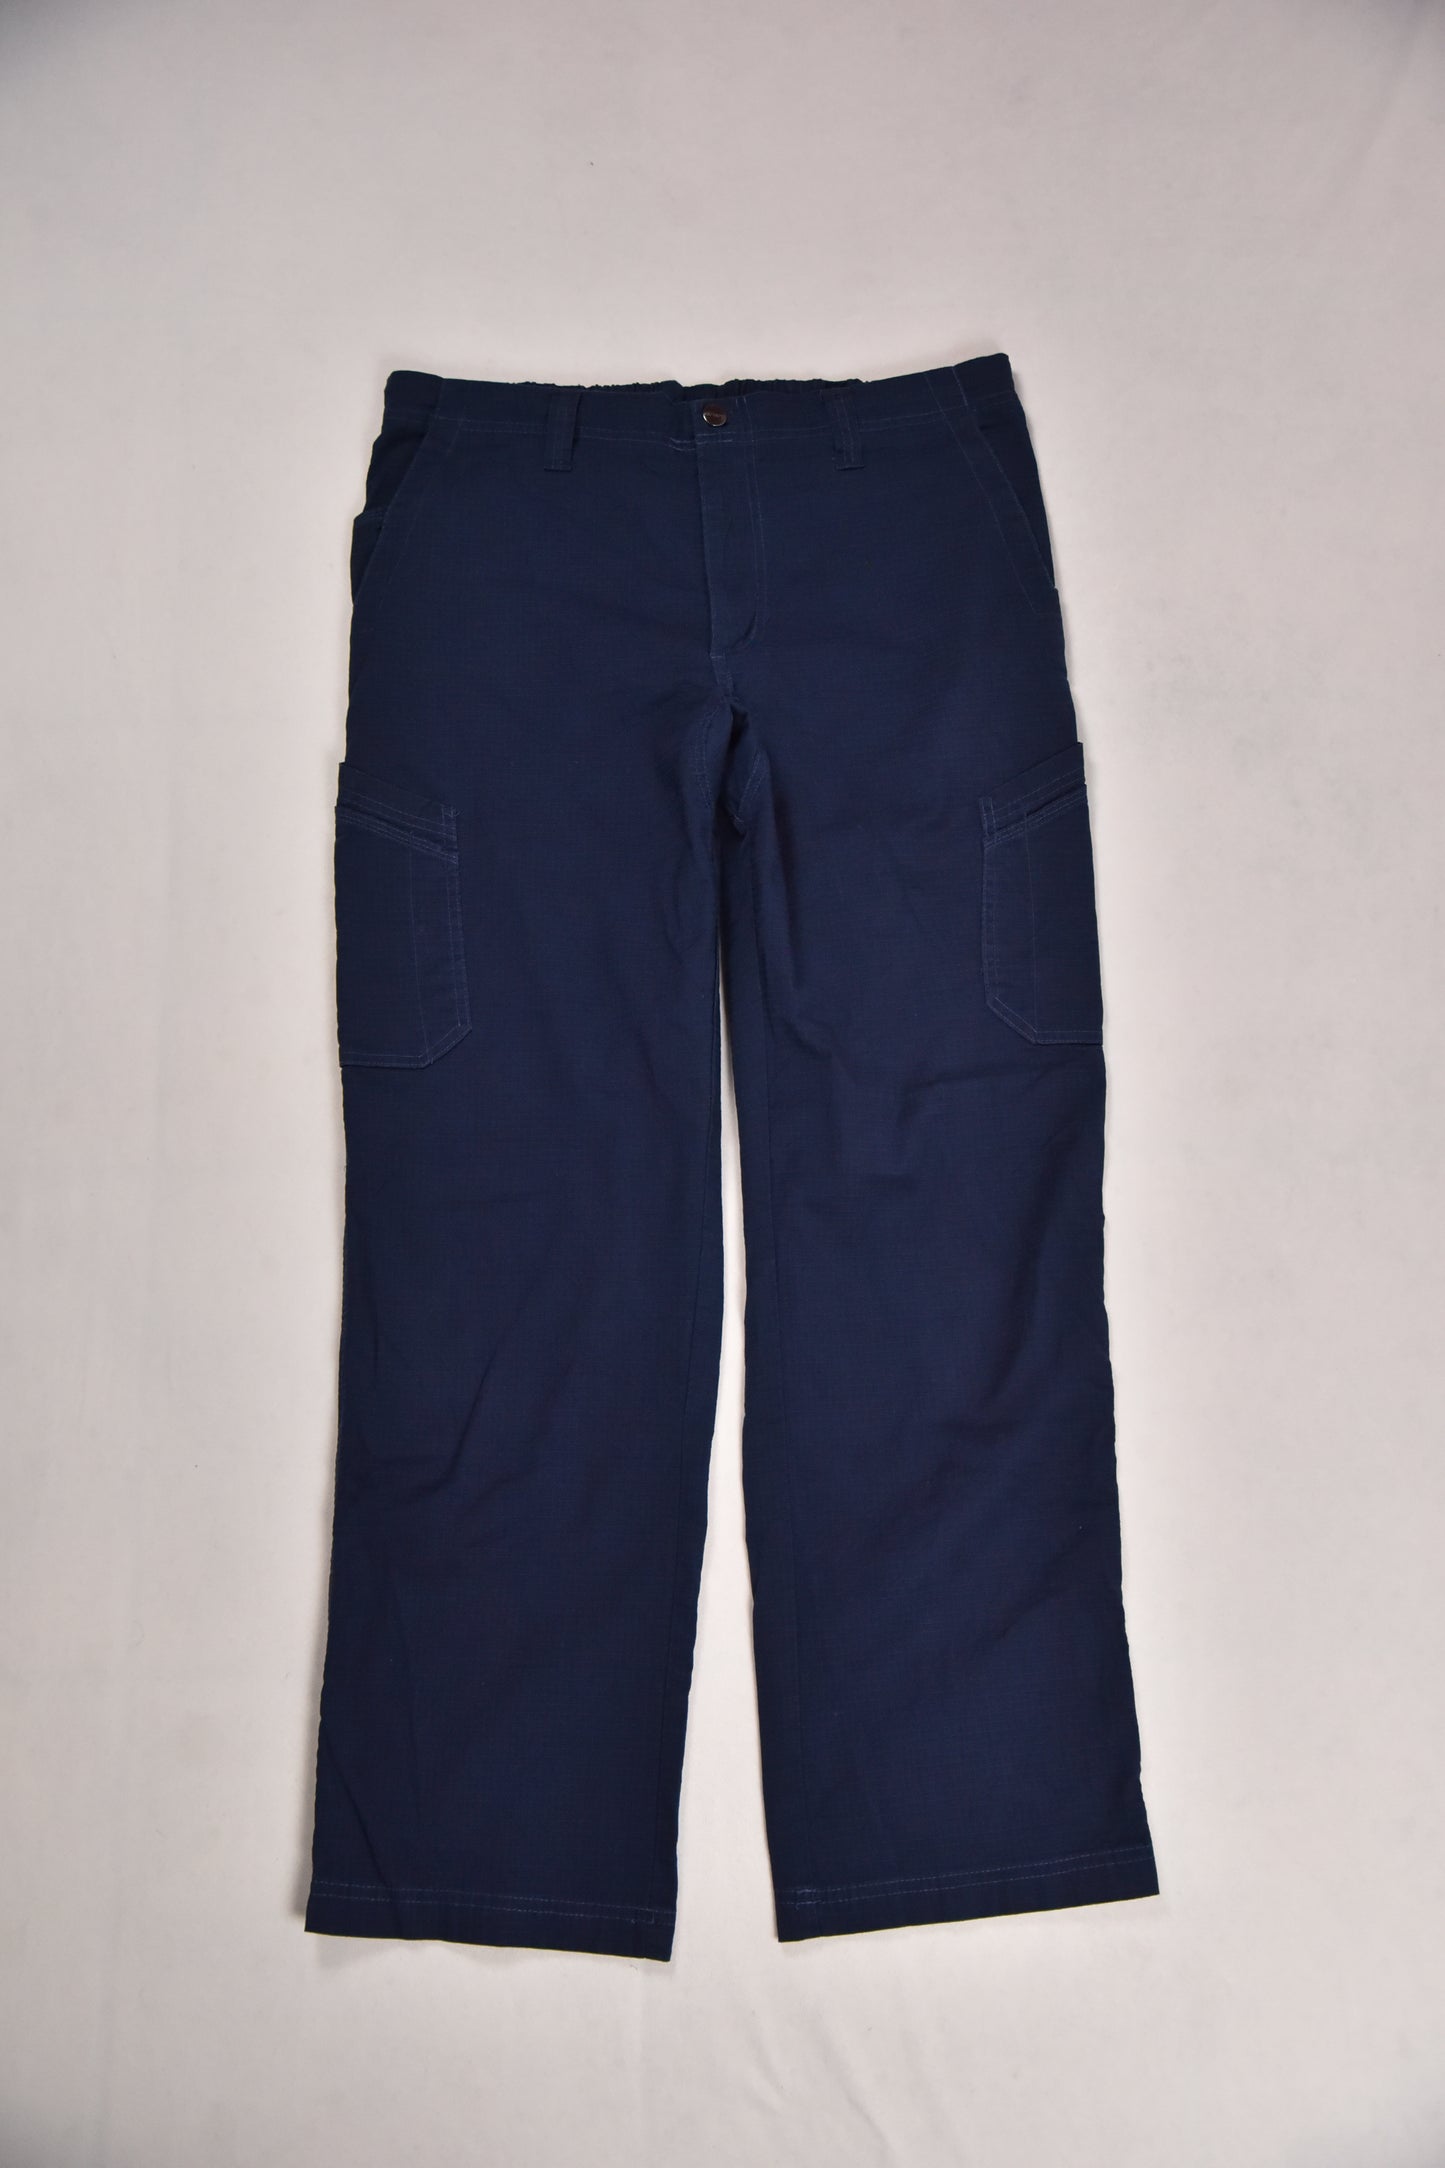 Carhartt Workwear Pants Vintage / S - L